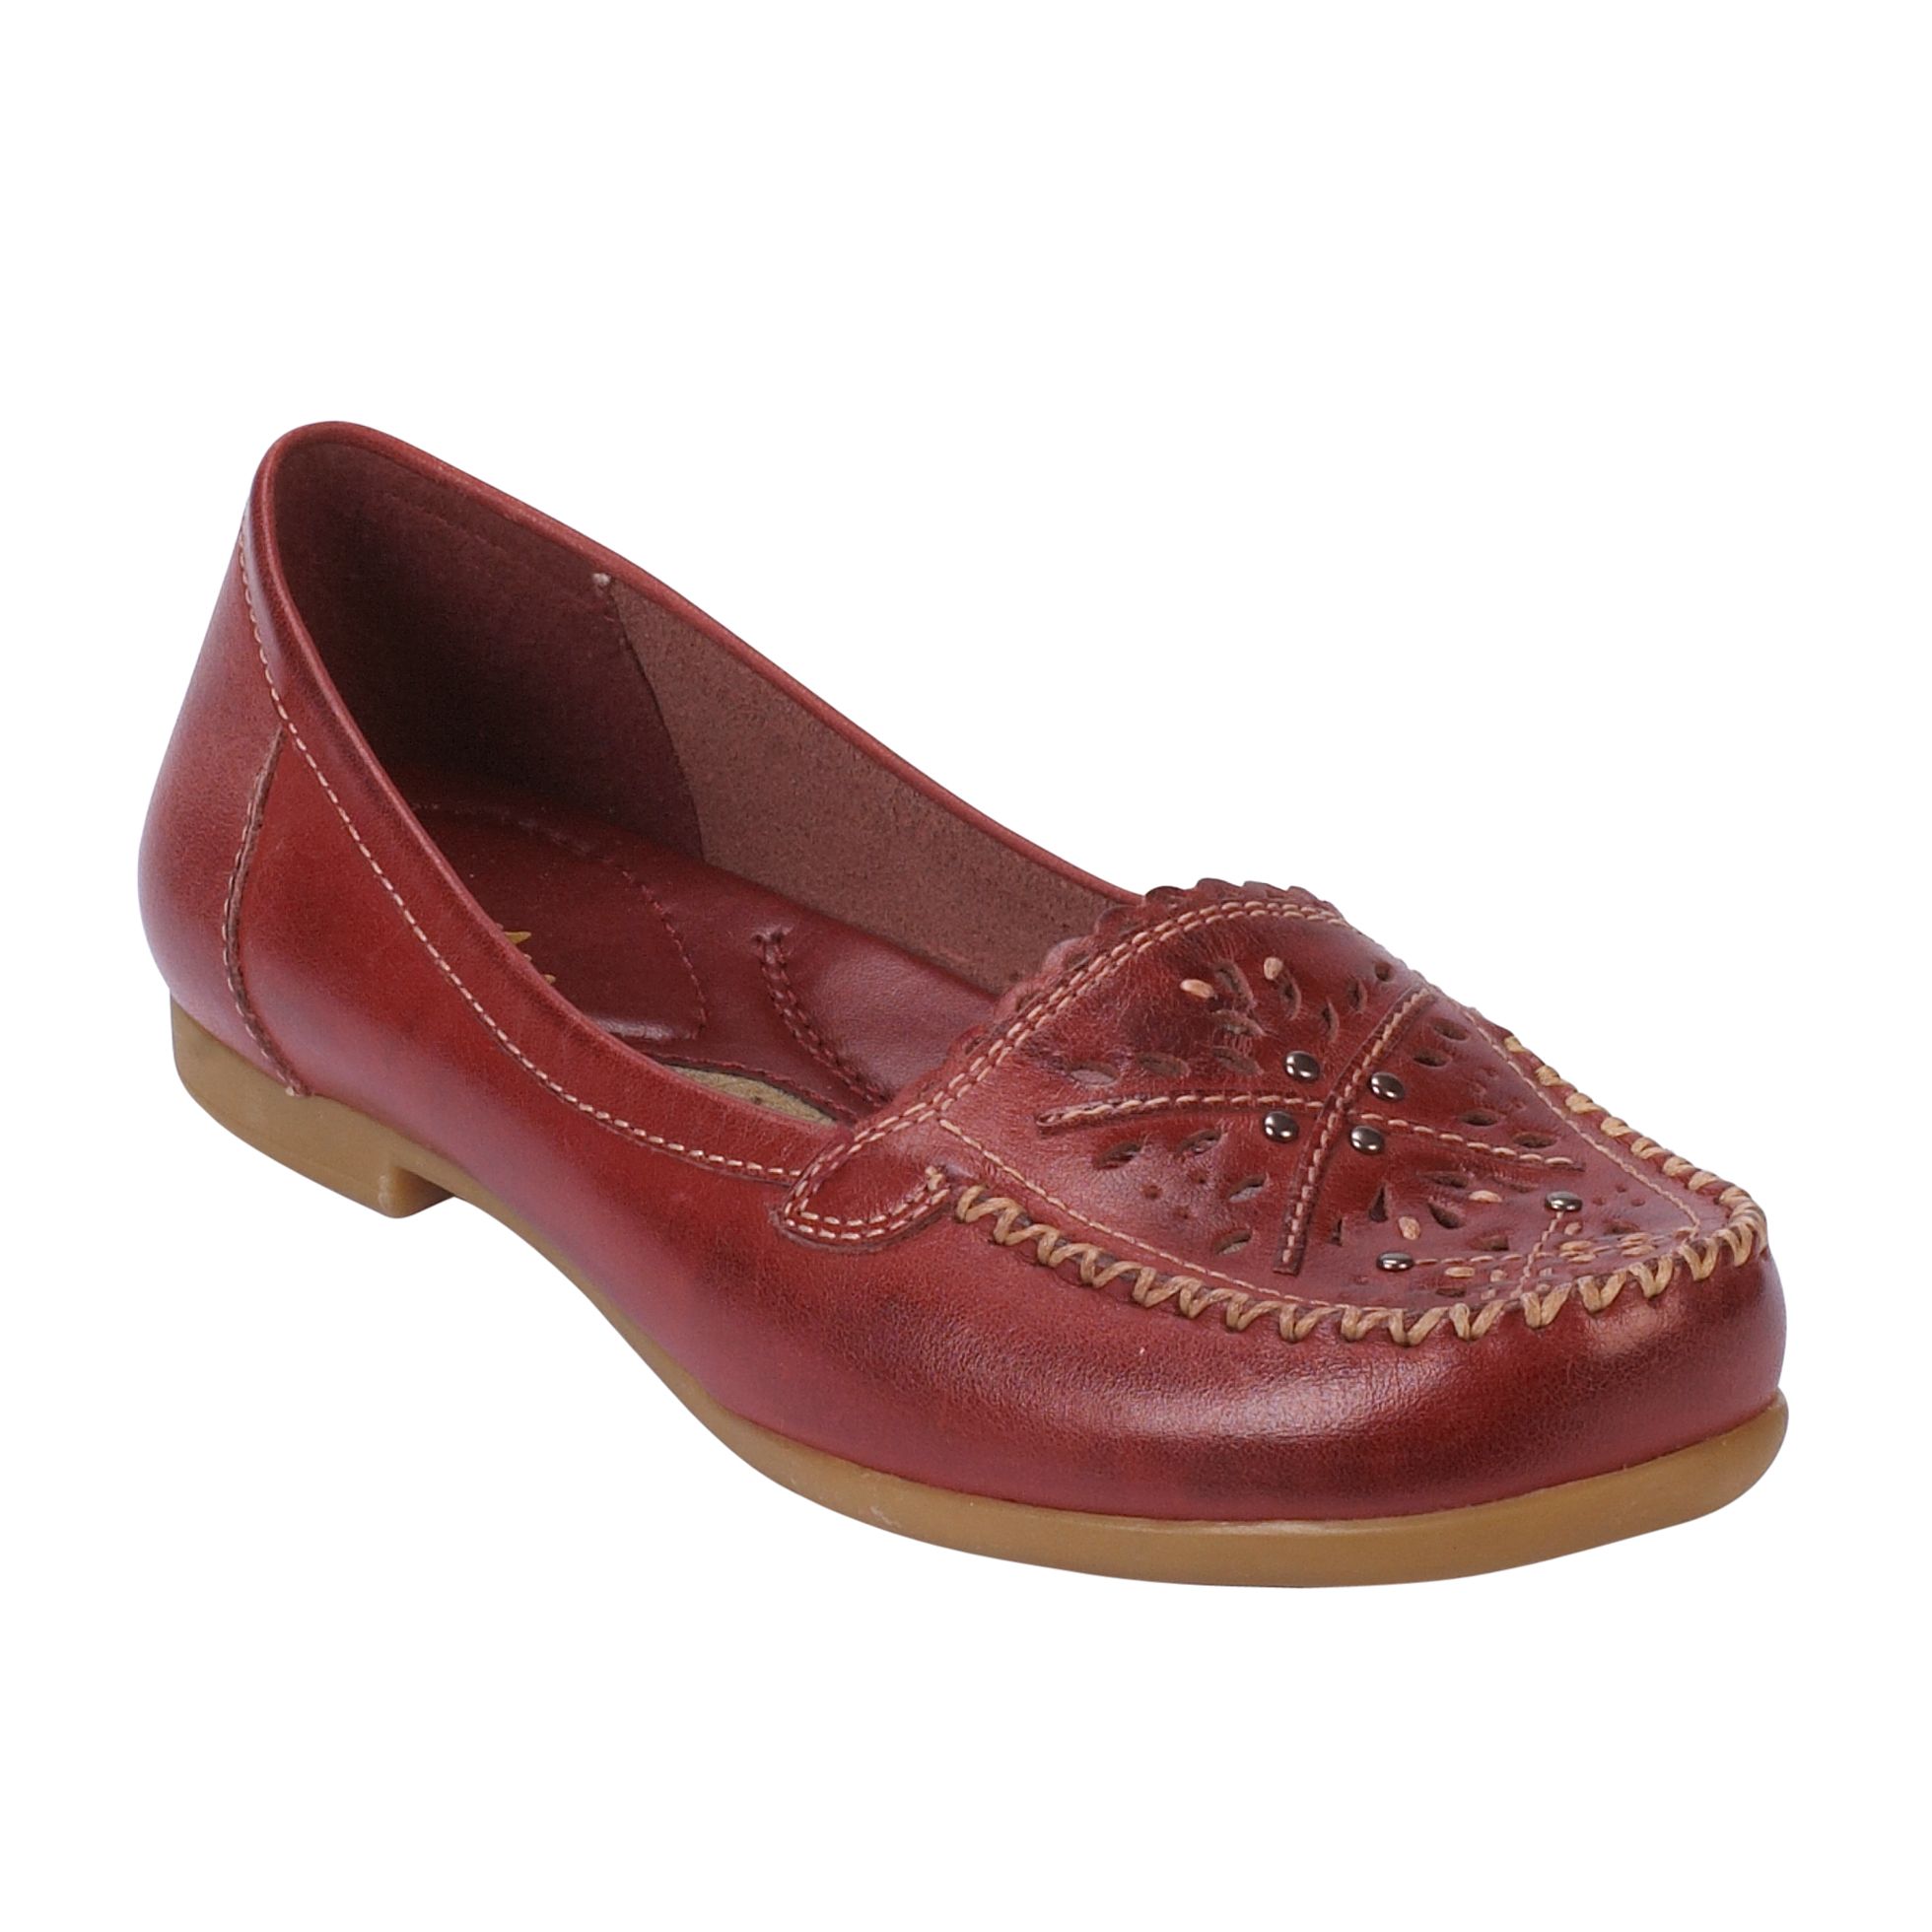 Thom McAn Savannah - Red - Shoes - Women's Shoes - Women's Flats